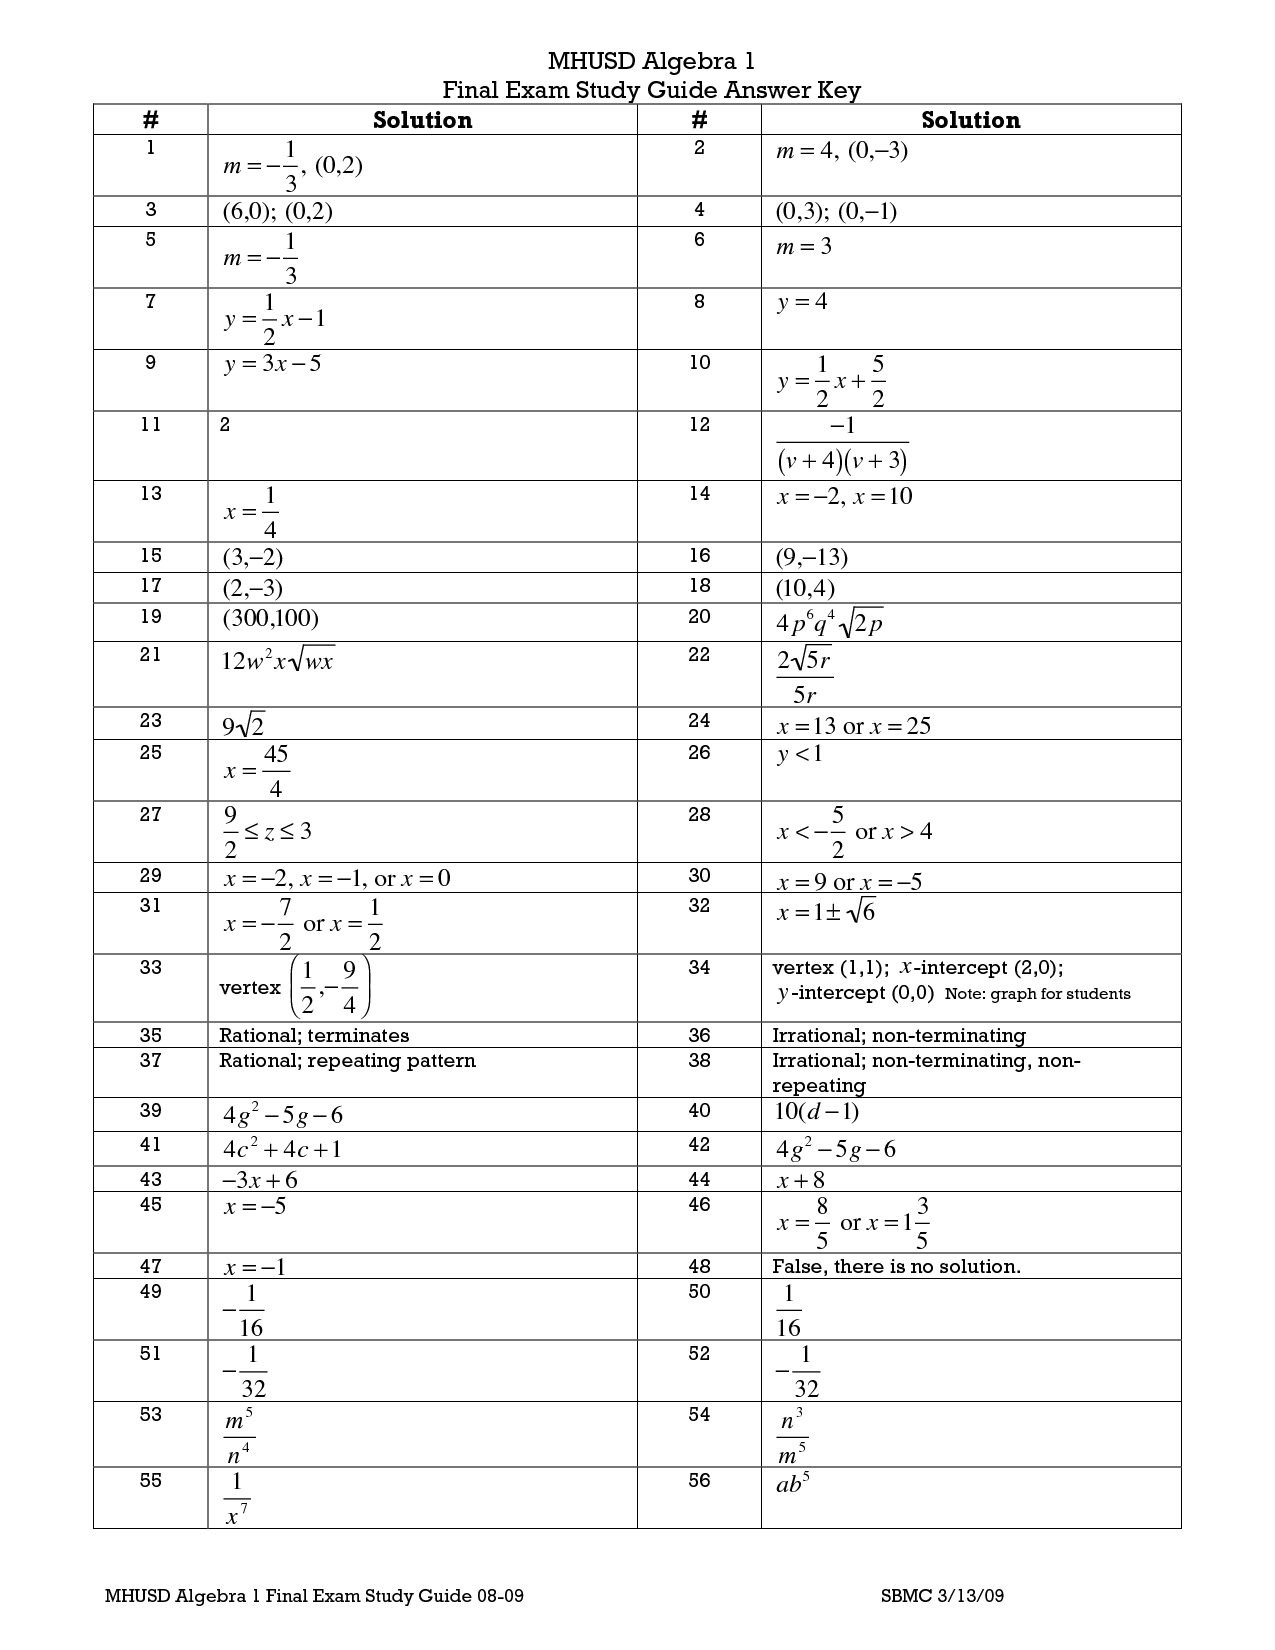 Algebra 1 Study Guide Answer Key Image